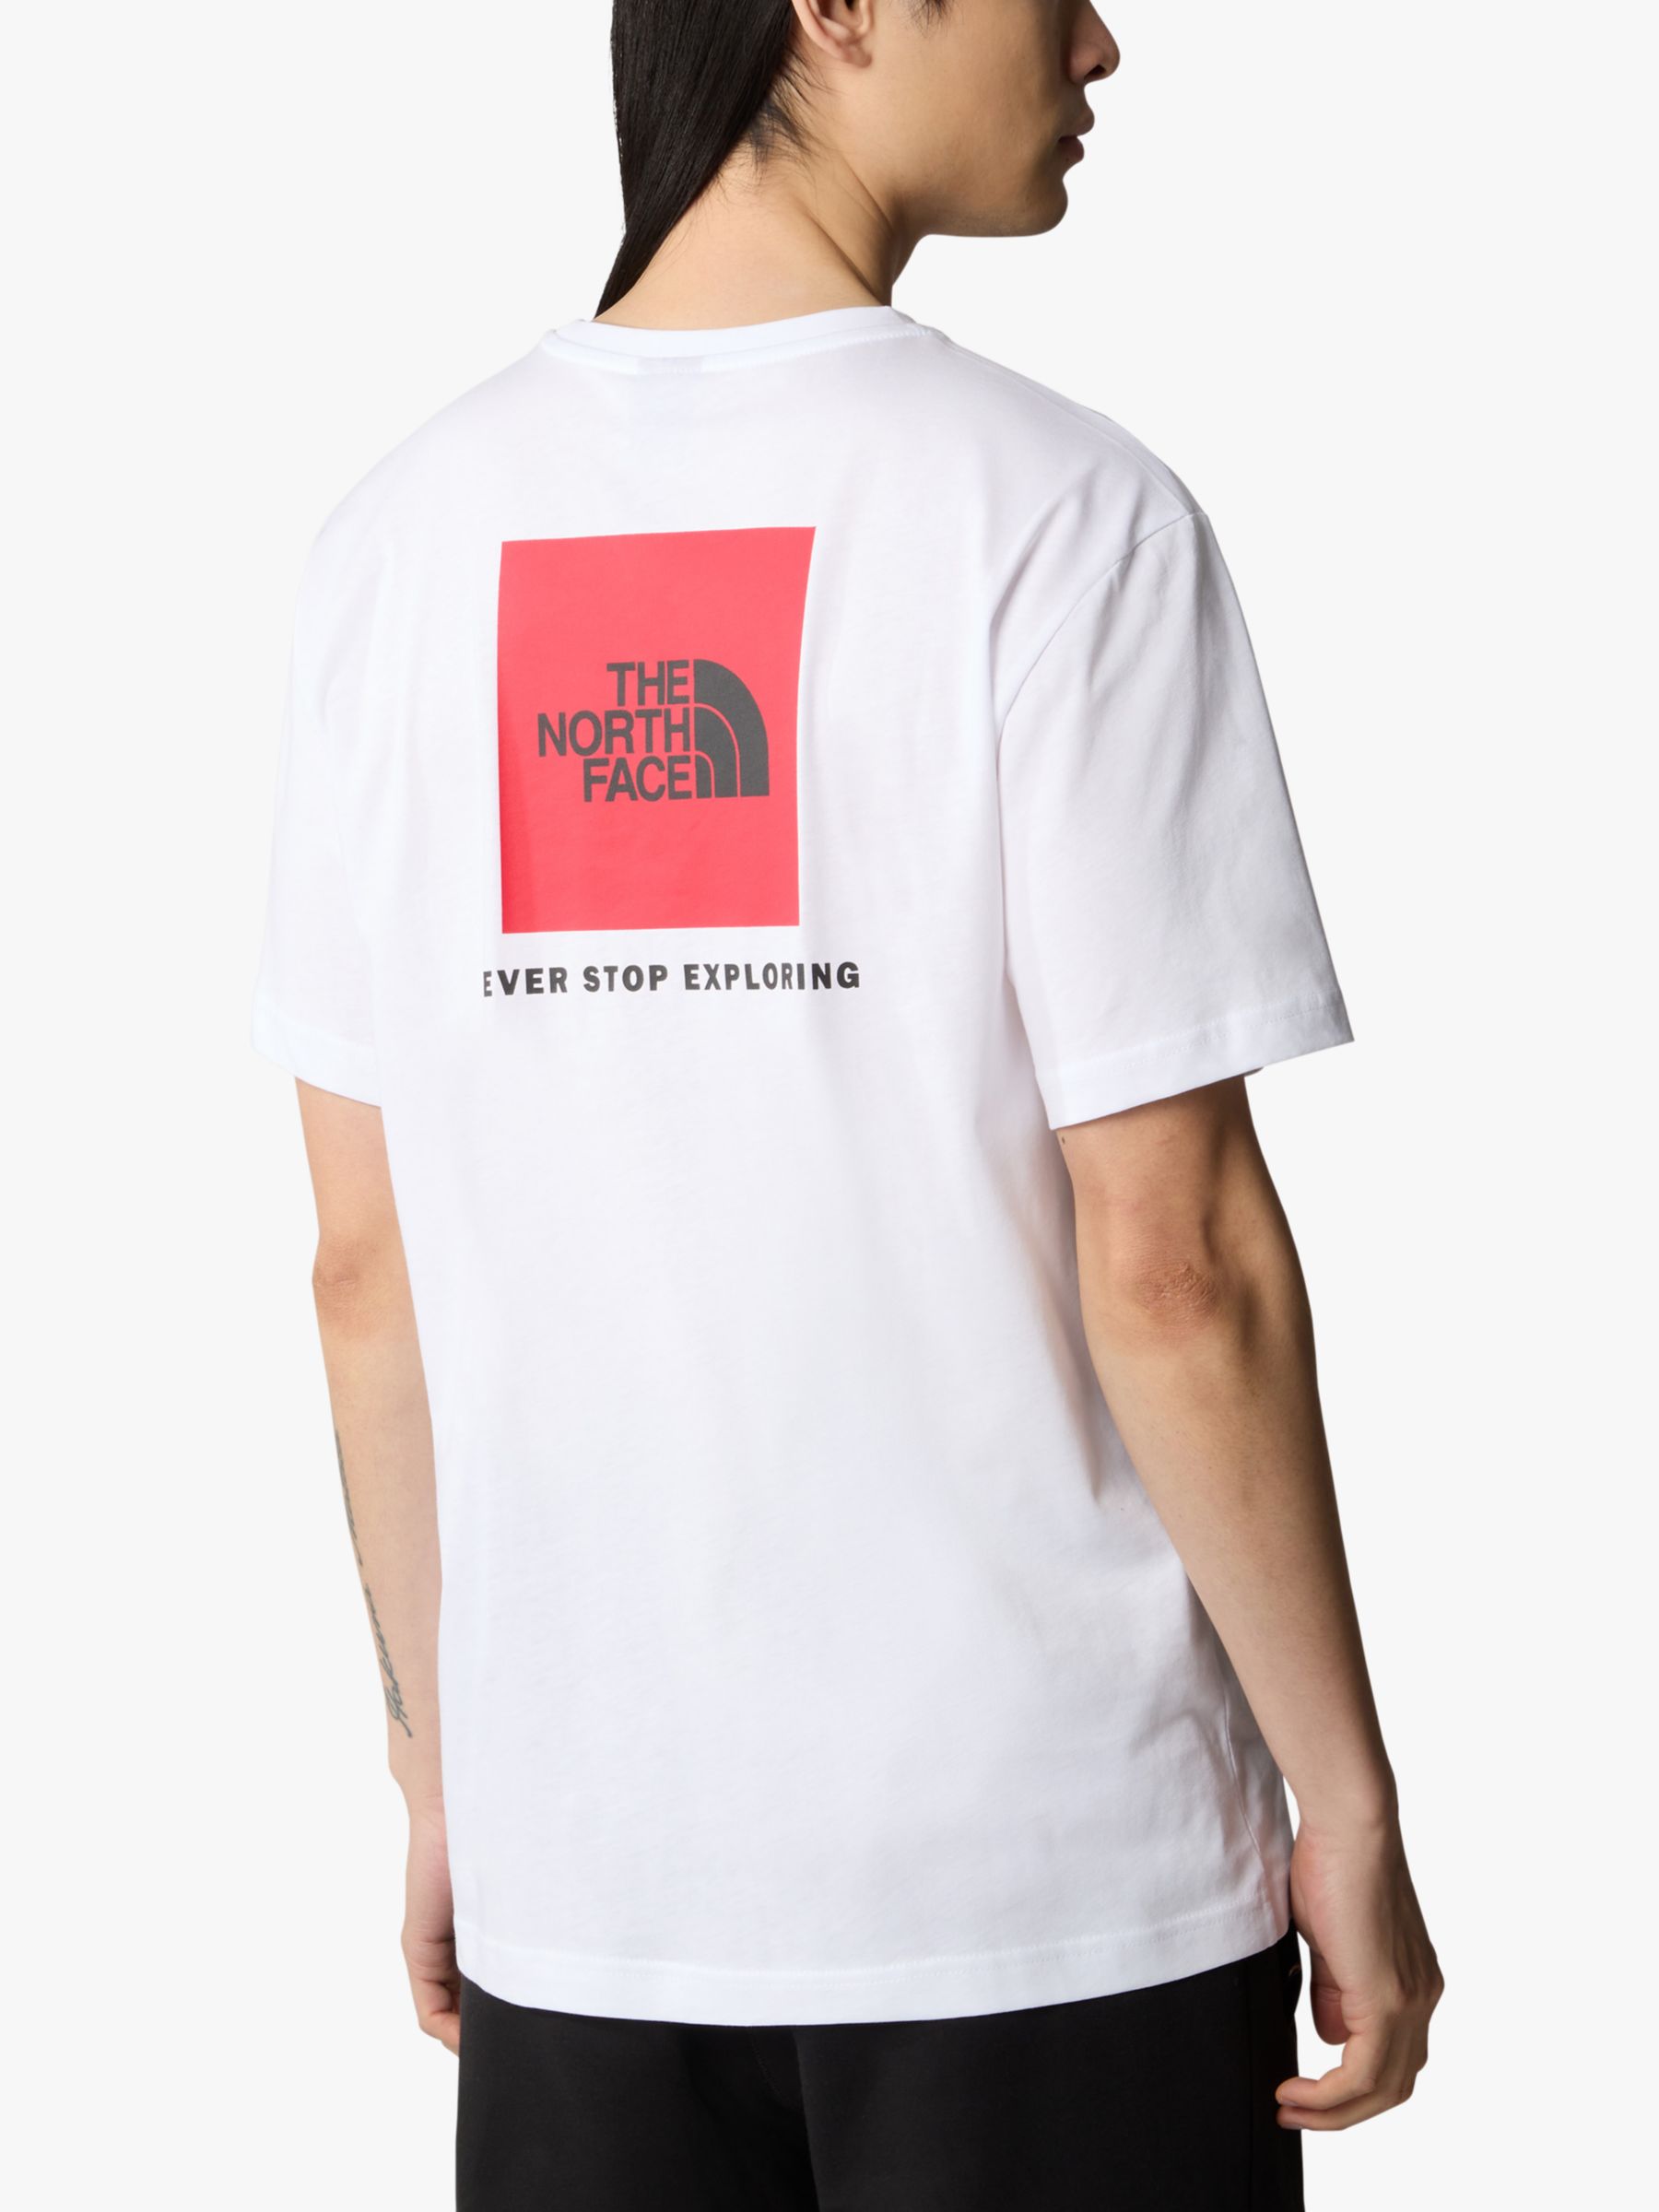 The North Face Redbox Logo Short Sleeve T-Shirt, White, M